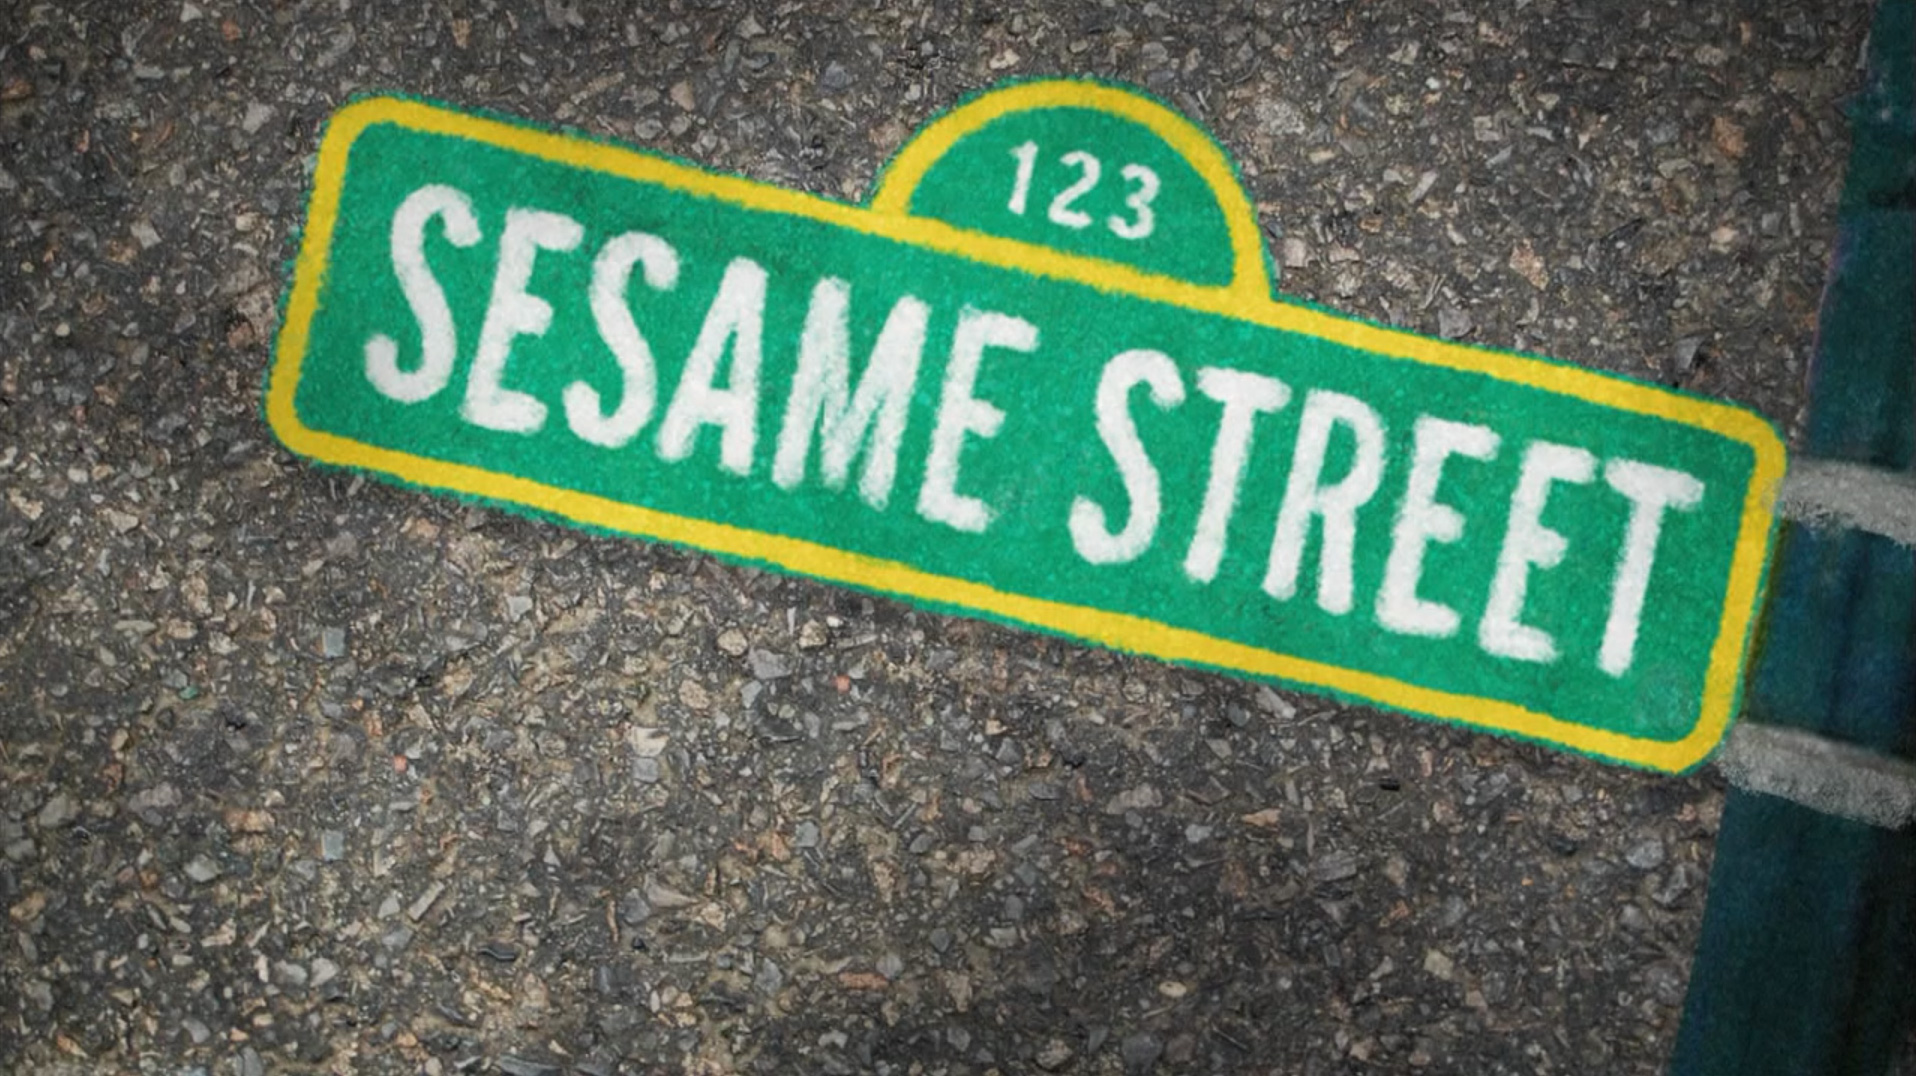 sesame street font similar